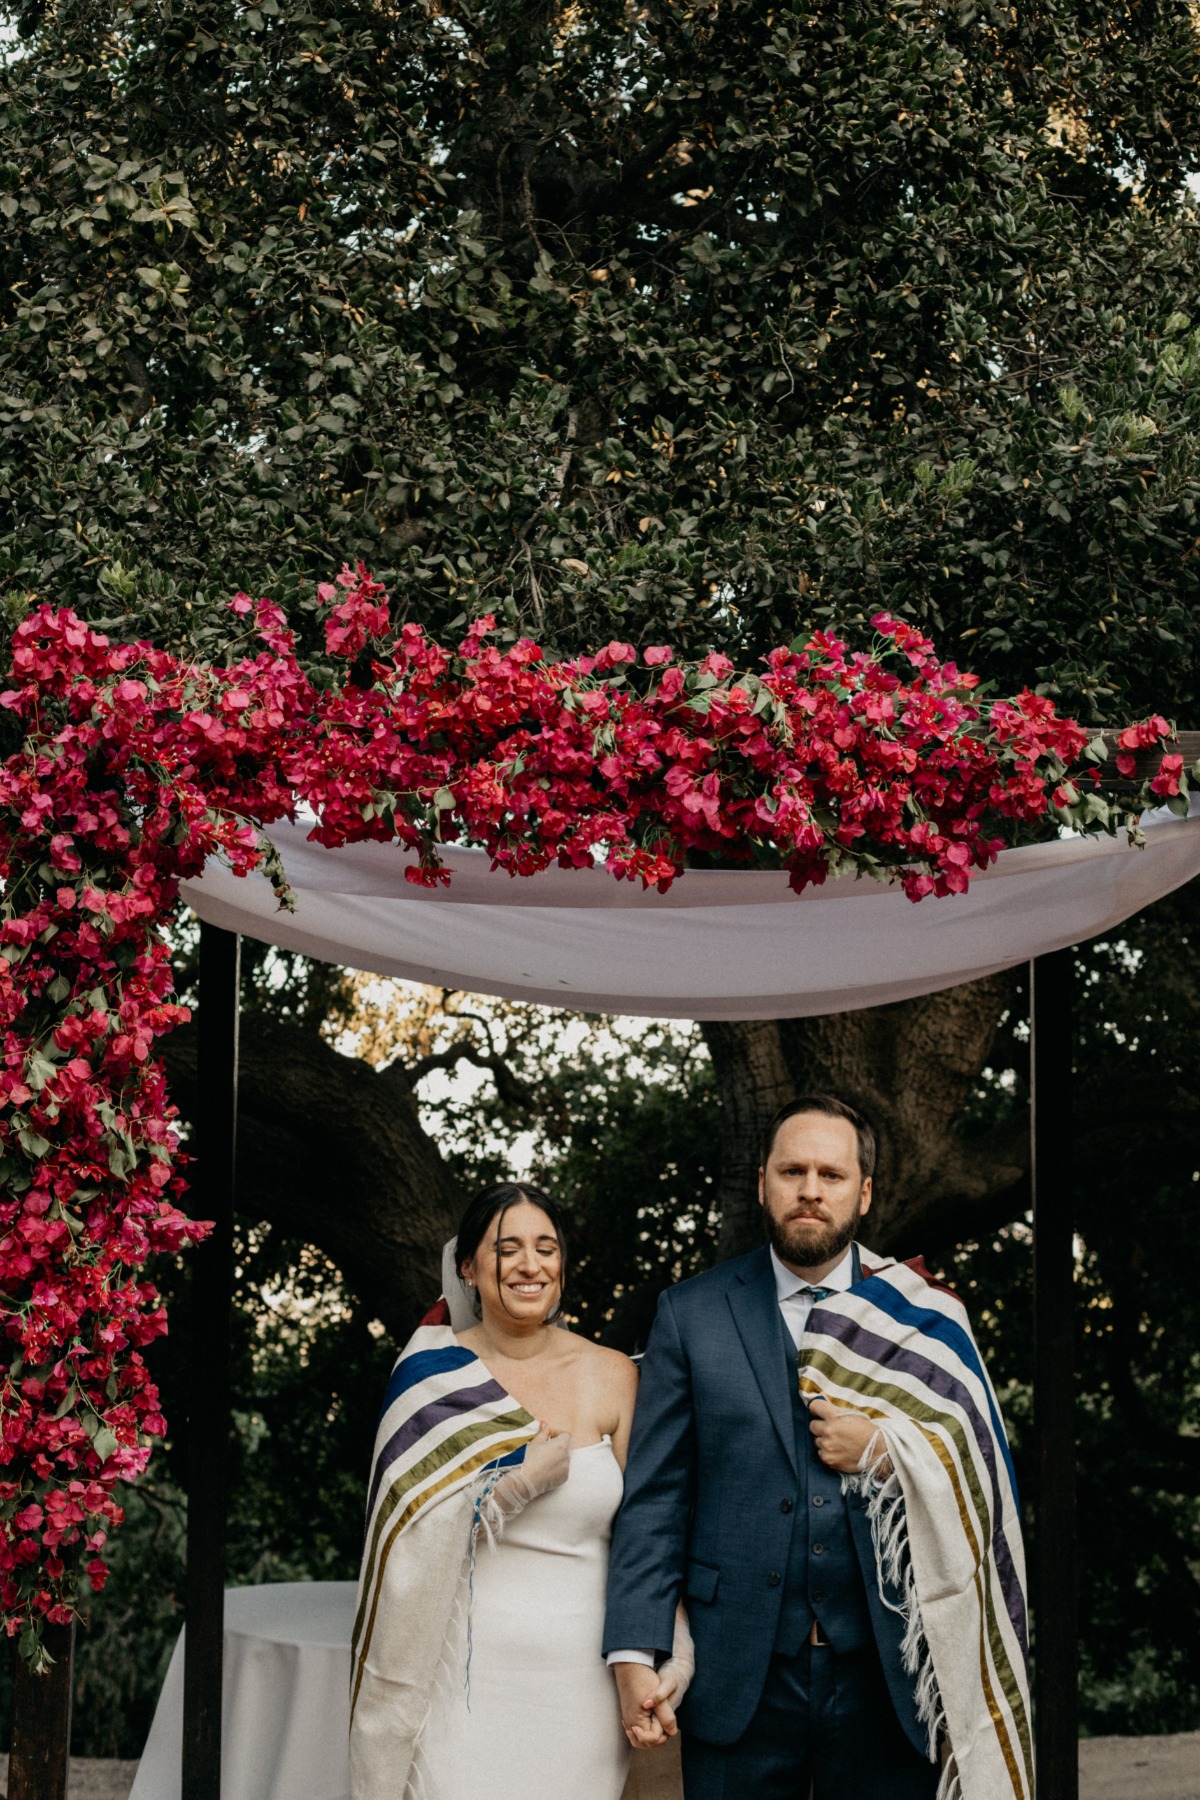 Jewish wedding ceremony tradtions